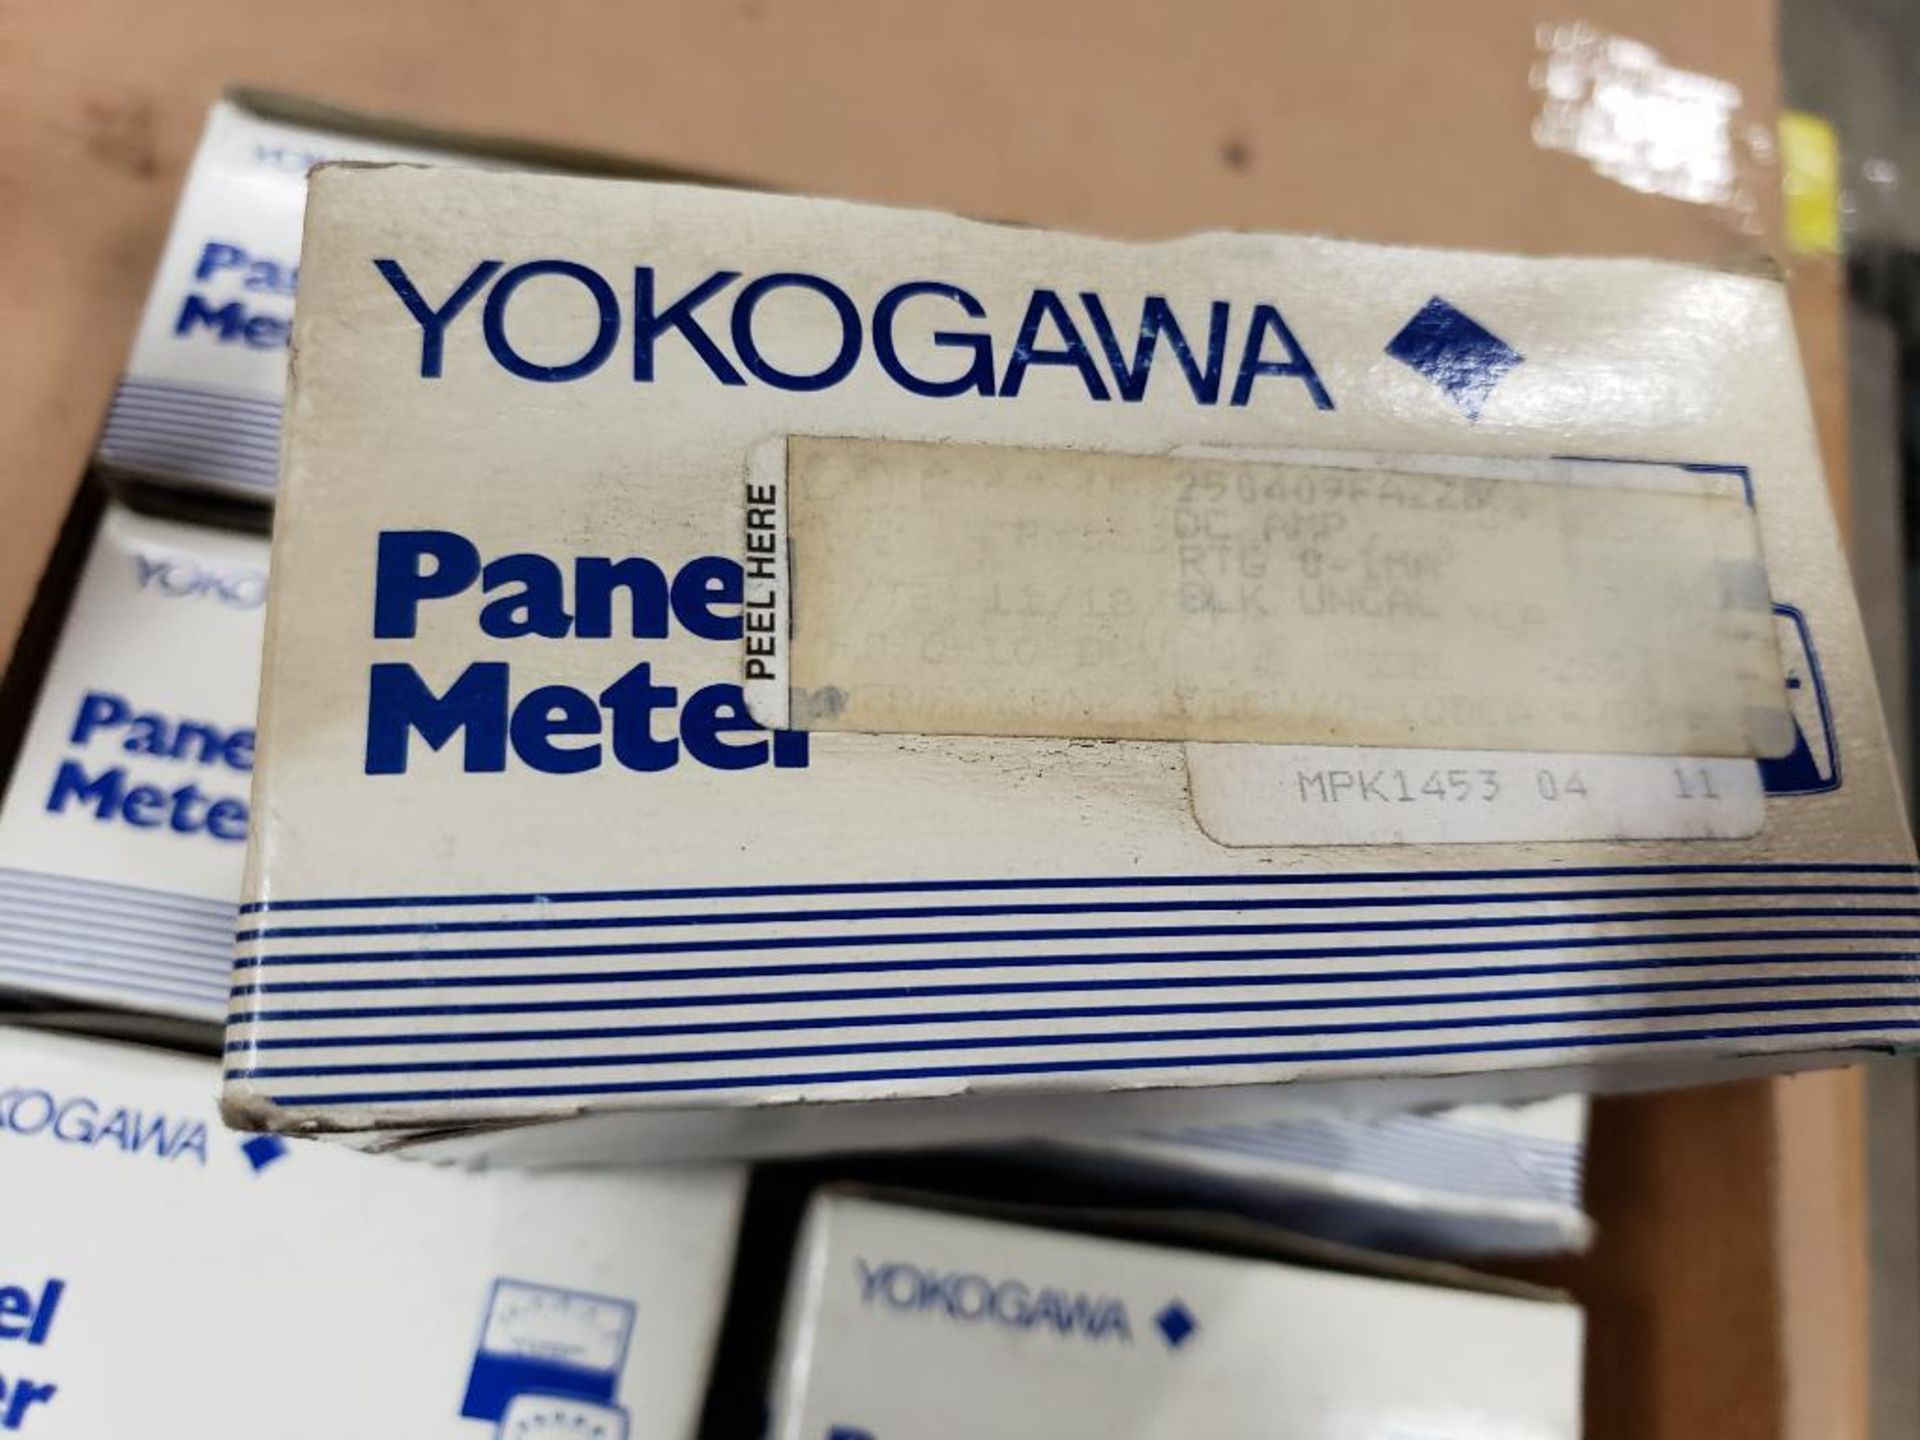 Qty 7 - Yokogawa panel meter. New in box. - Image 4 of 5